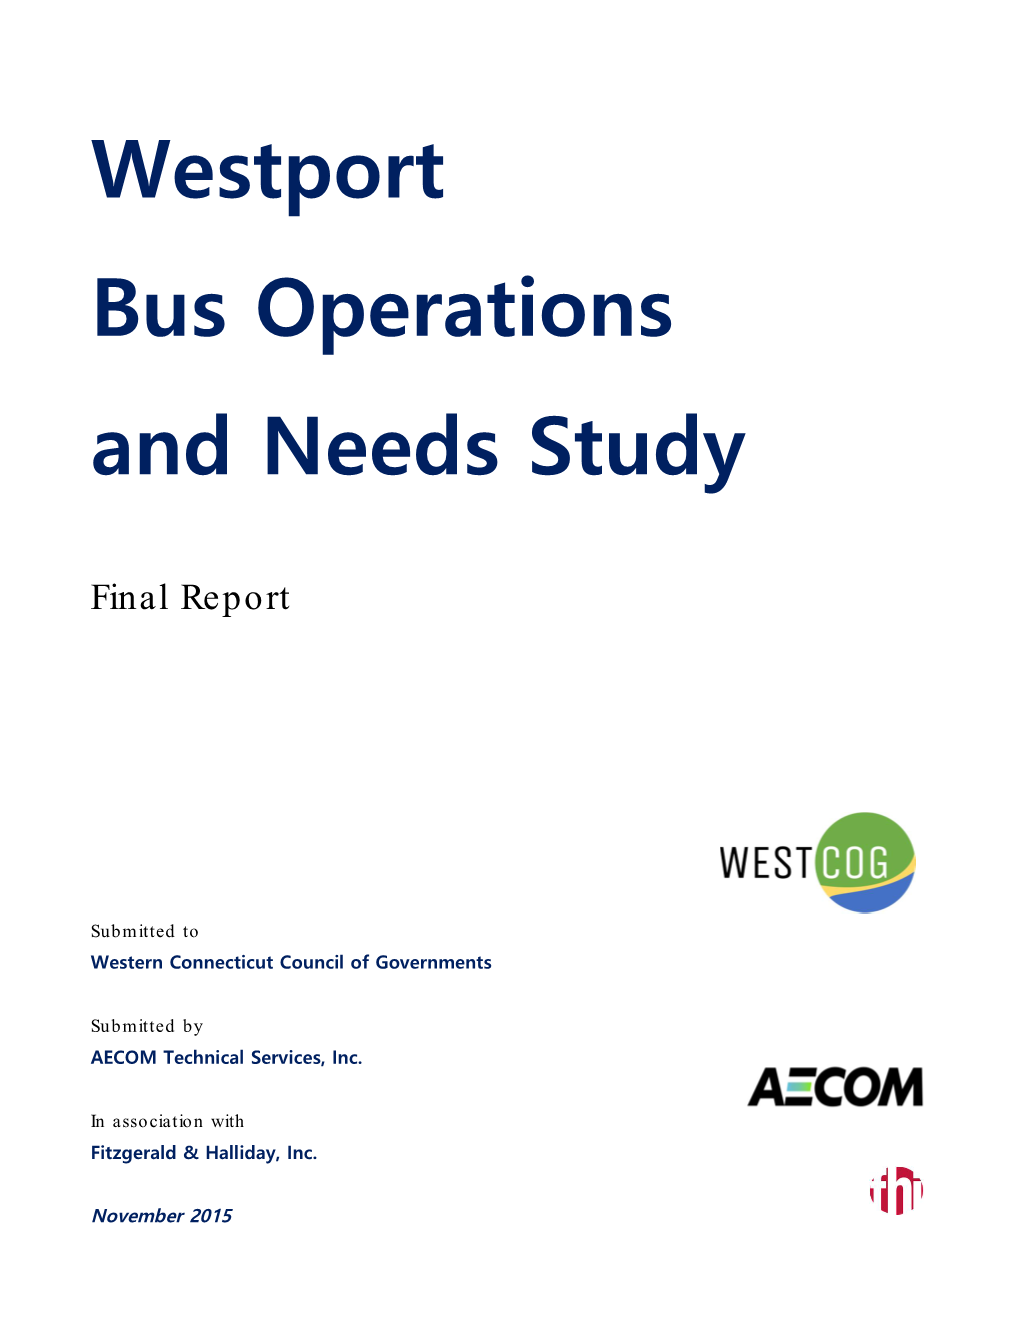 Westport Bus Operations and Needs Study